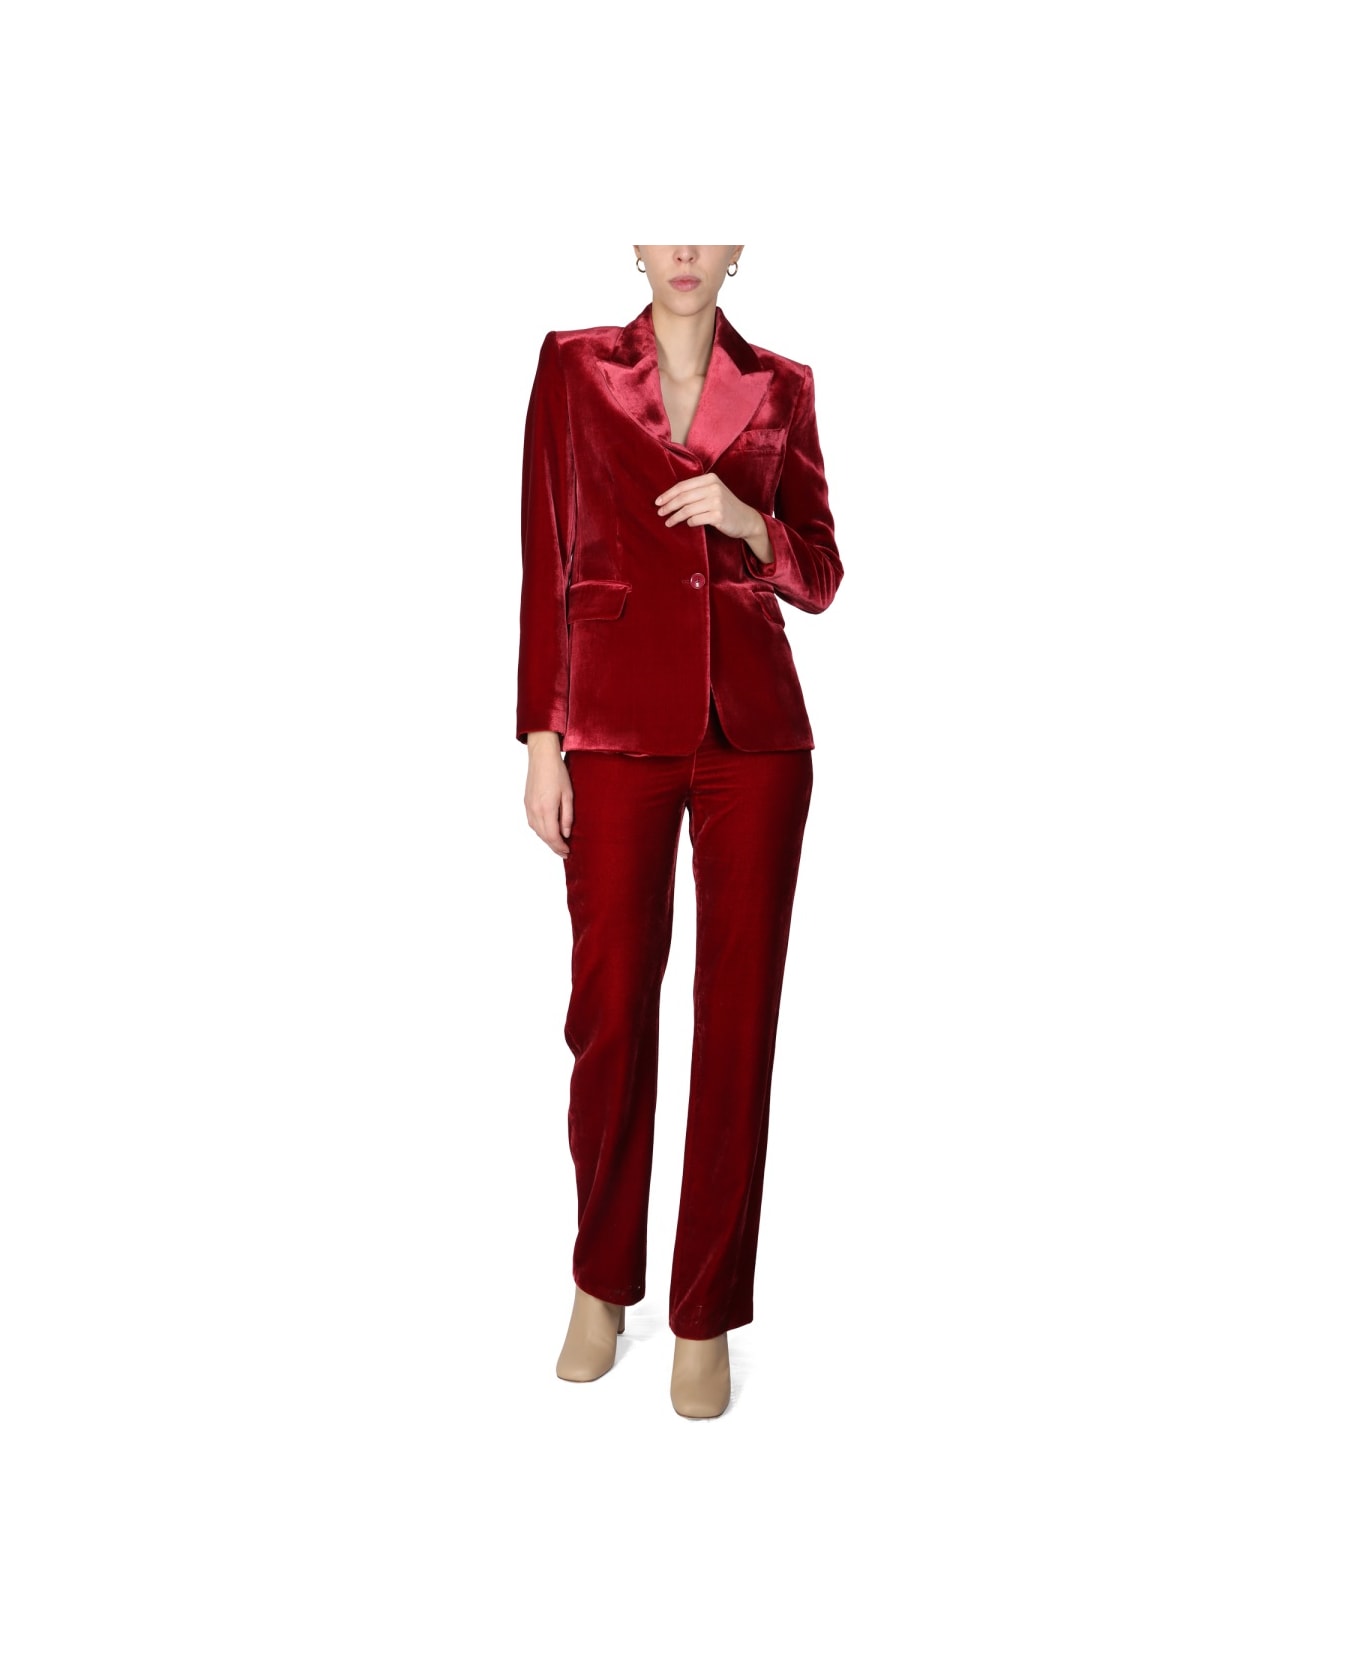 Boutique Moschino Velvet Jacket - RED ジャケット